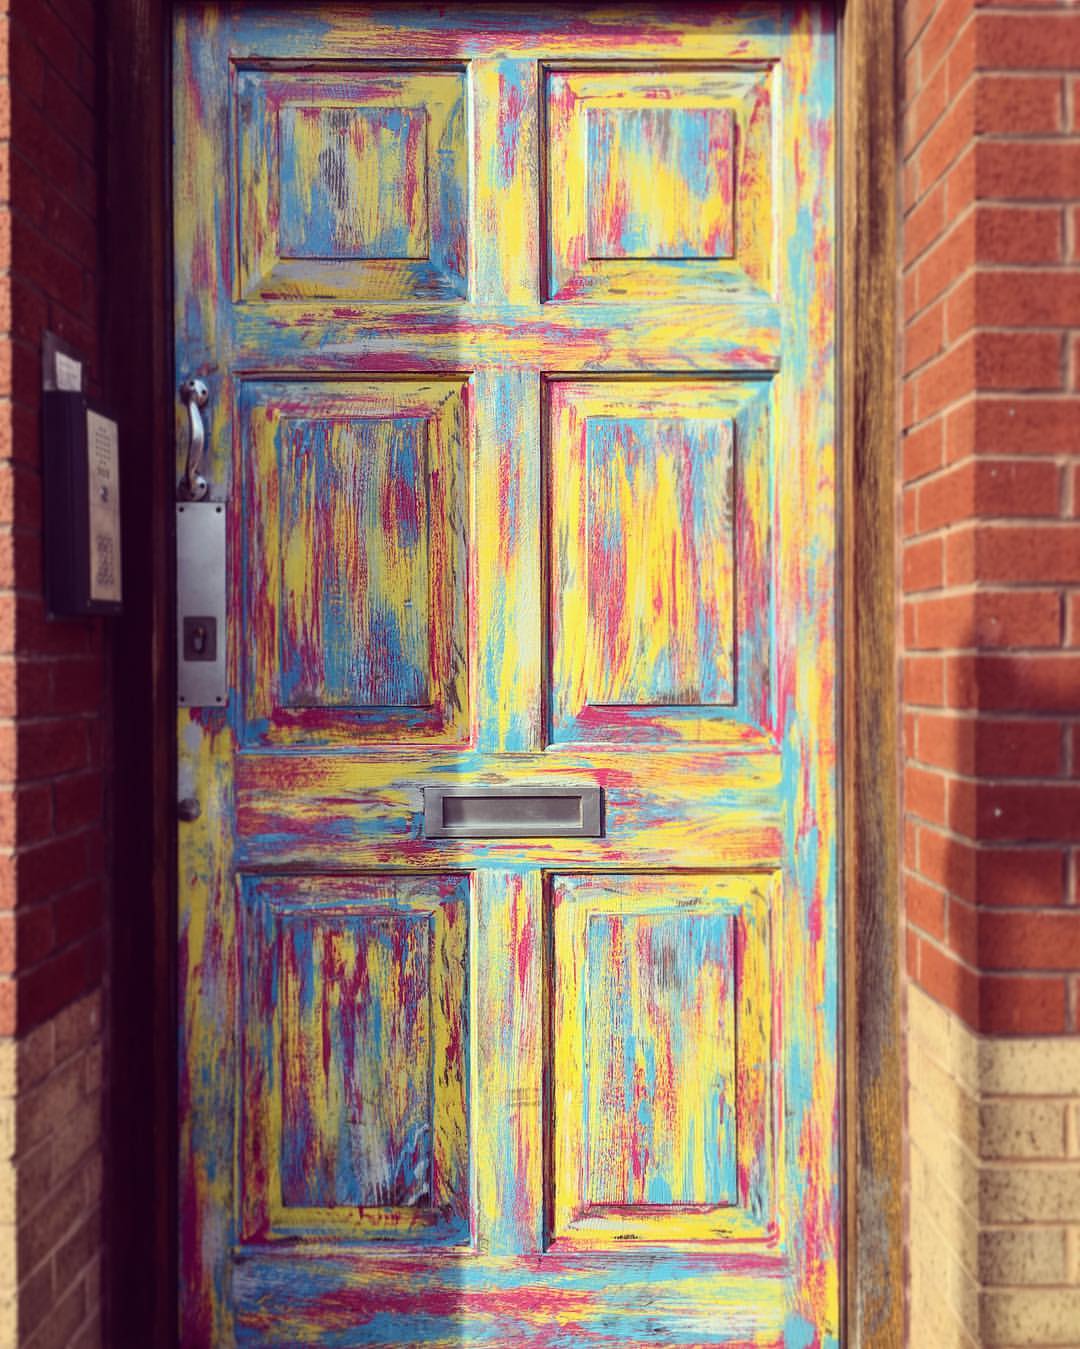 Colourful door of Redbrick House, Stokes Croft, Bristol